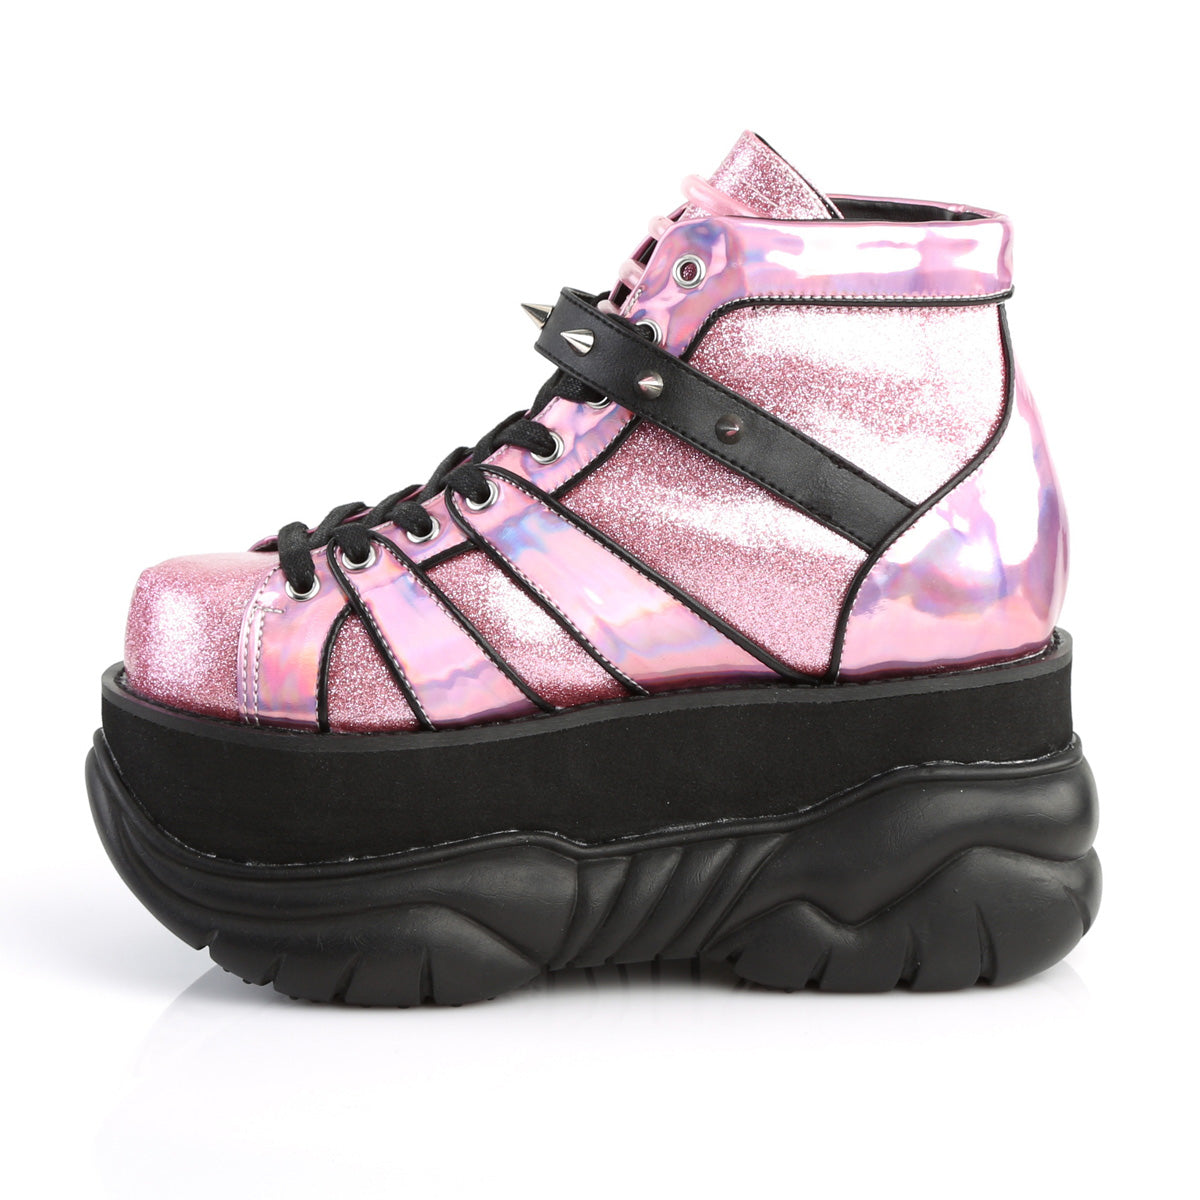 DemoniaCult Mens Boots NEPTUNE-100 Pink Glitter-Silver/Vegan Leather